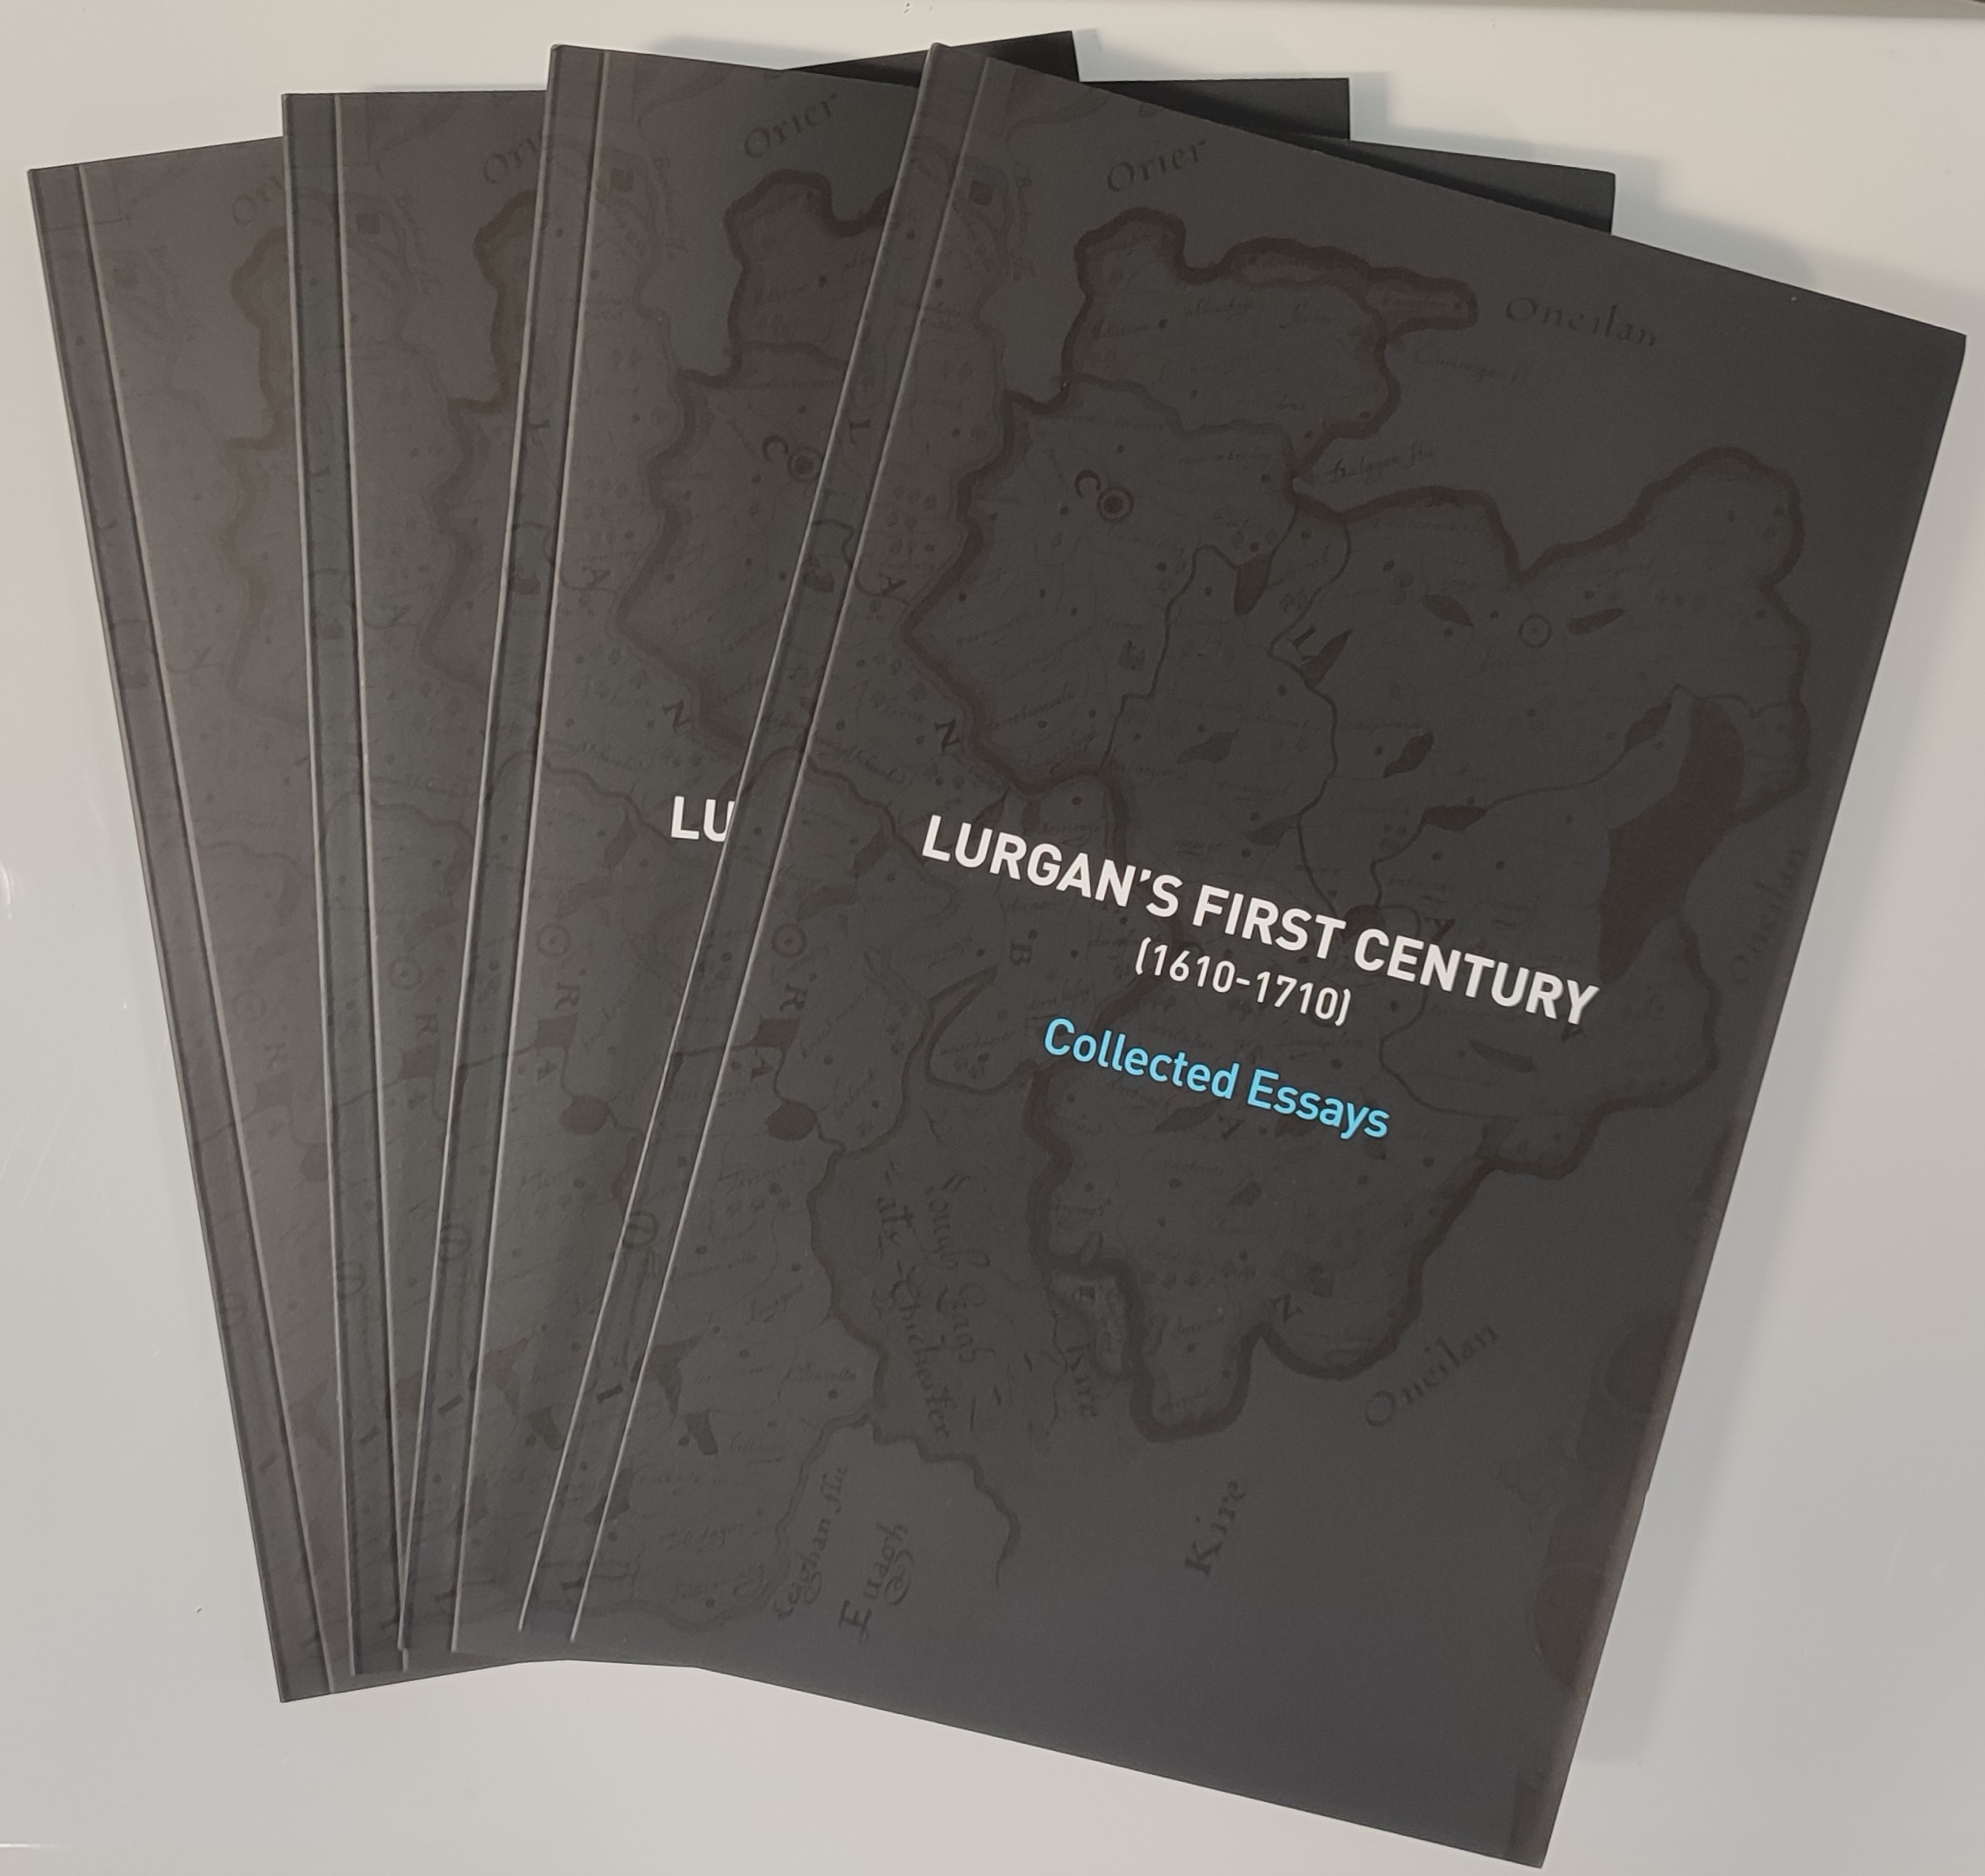 2022 WORLD BOOK DAY: LURGAN’S FIRST CENTURY BOOK LAUNCH